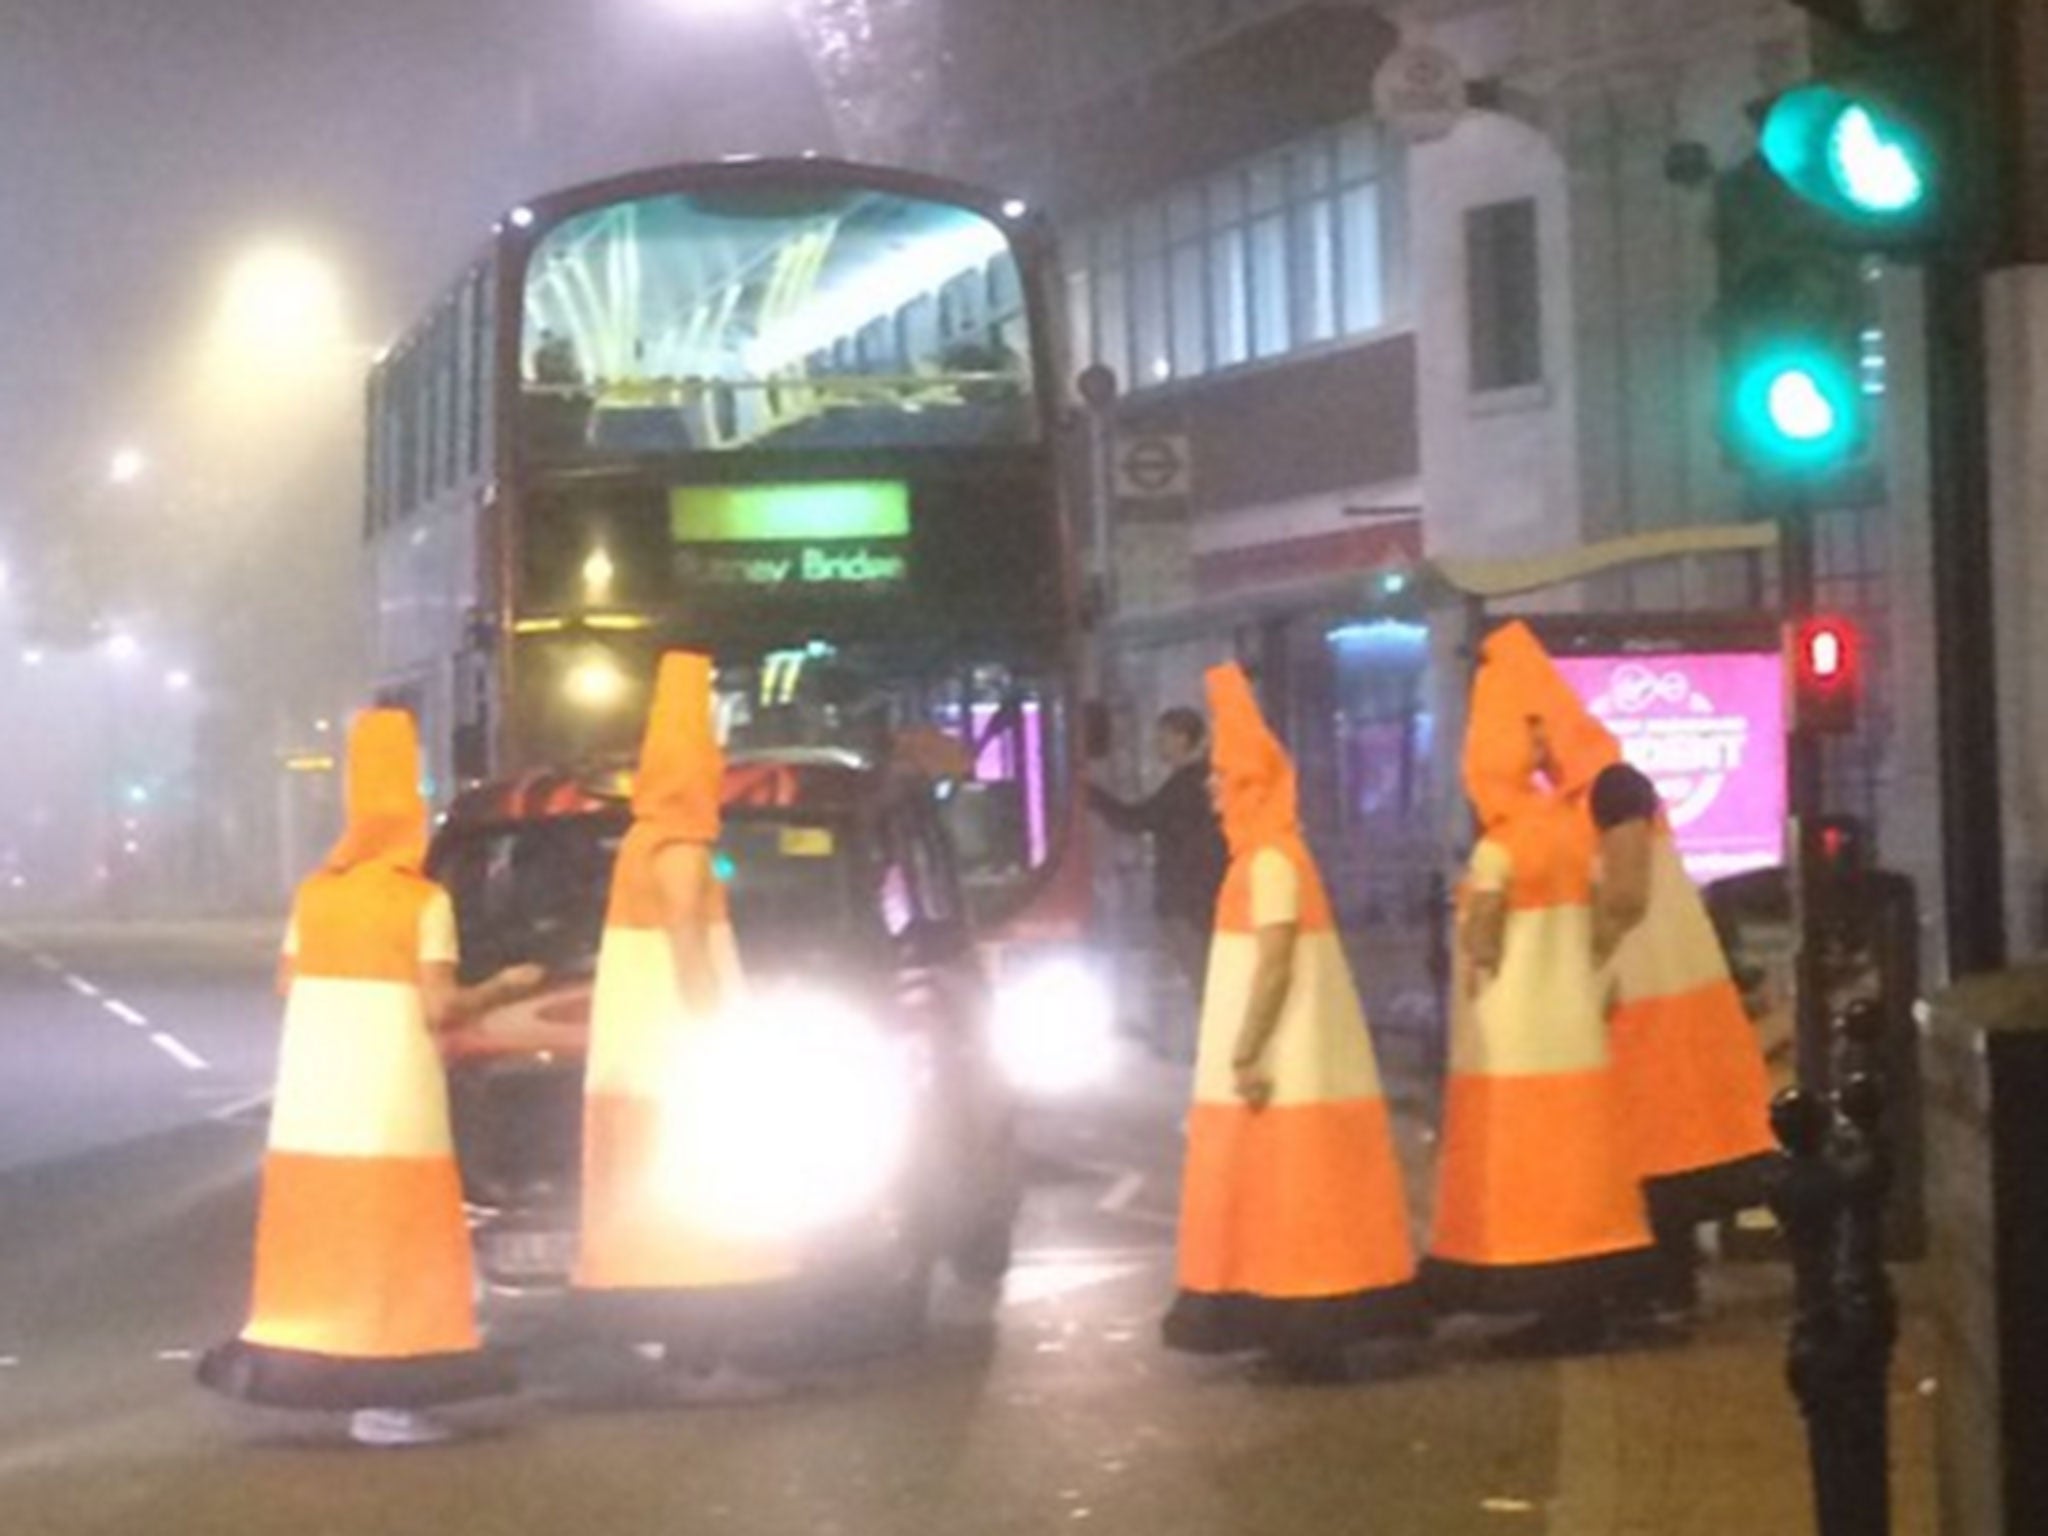 Men dressed as traffic cones block traffic in Clarence Street